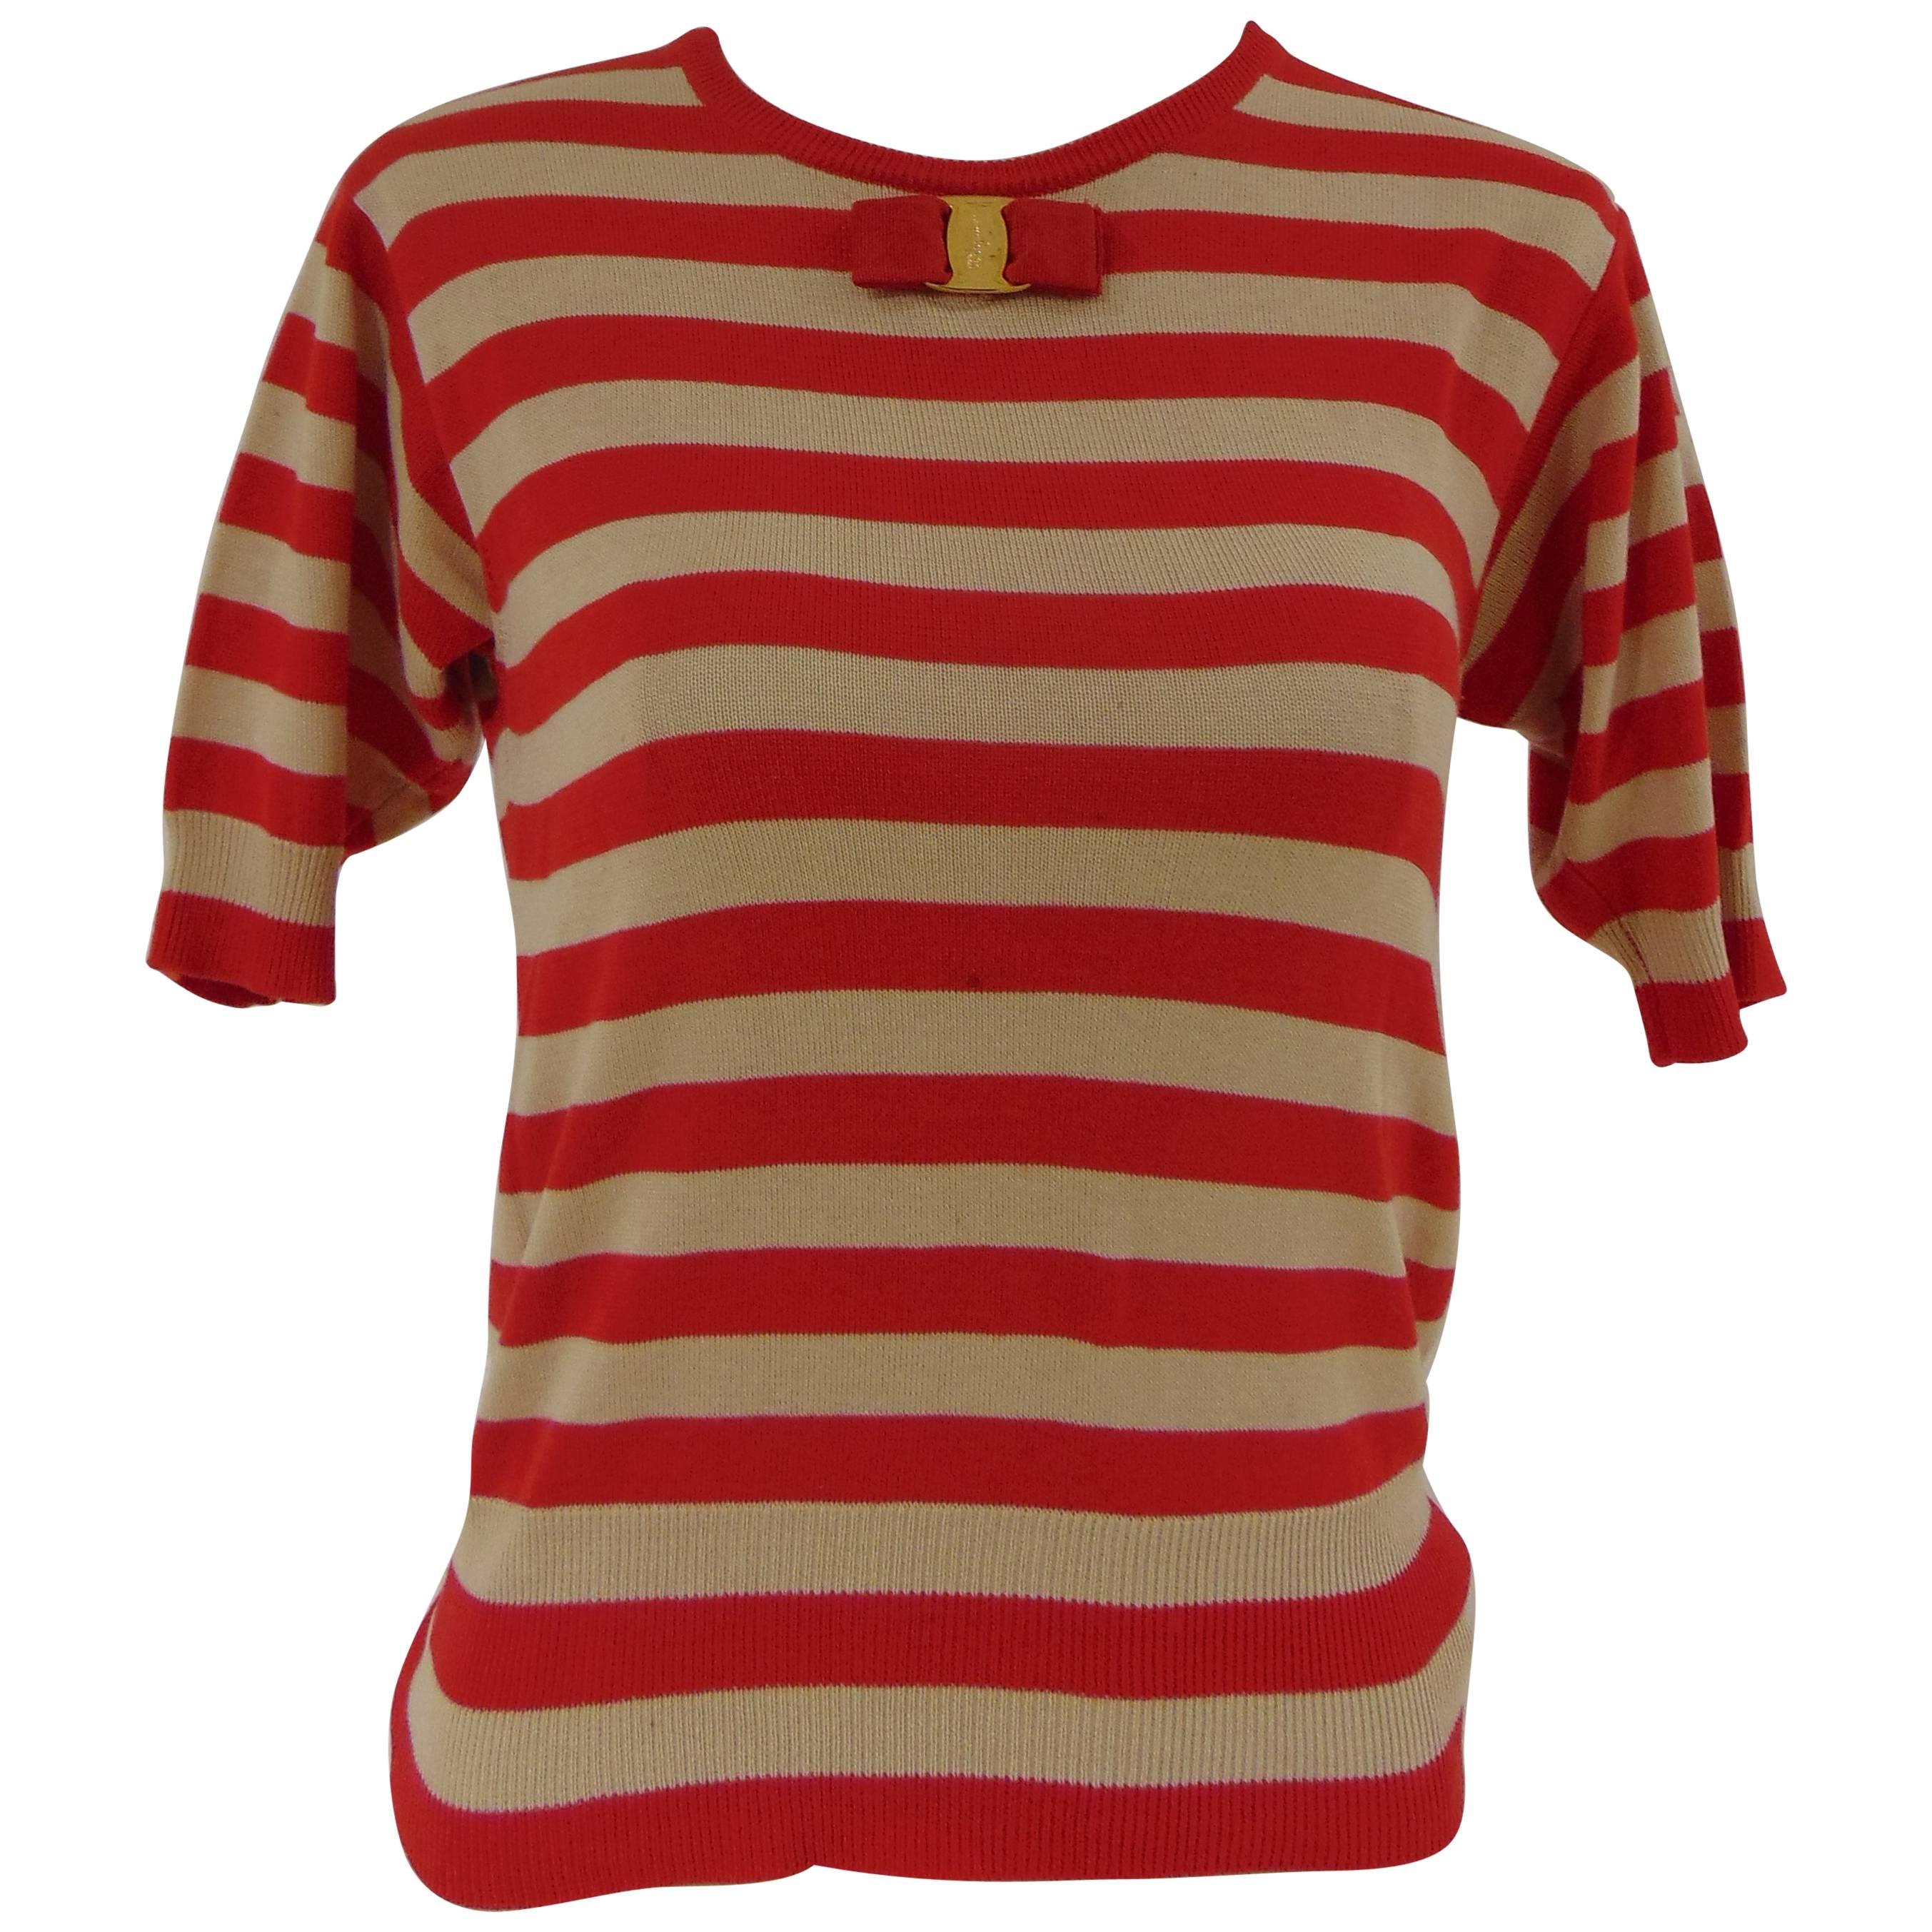 Salvatore Ferragamo red cream stripes short sleeves cotton shirt